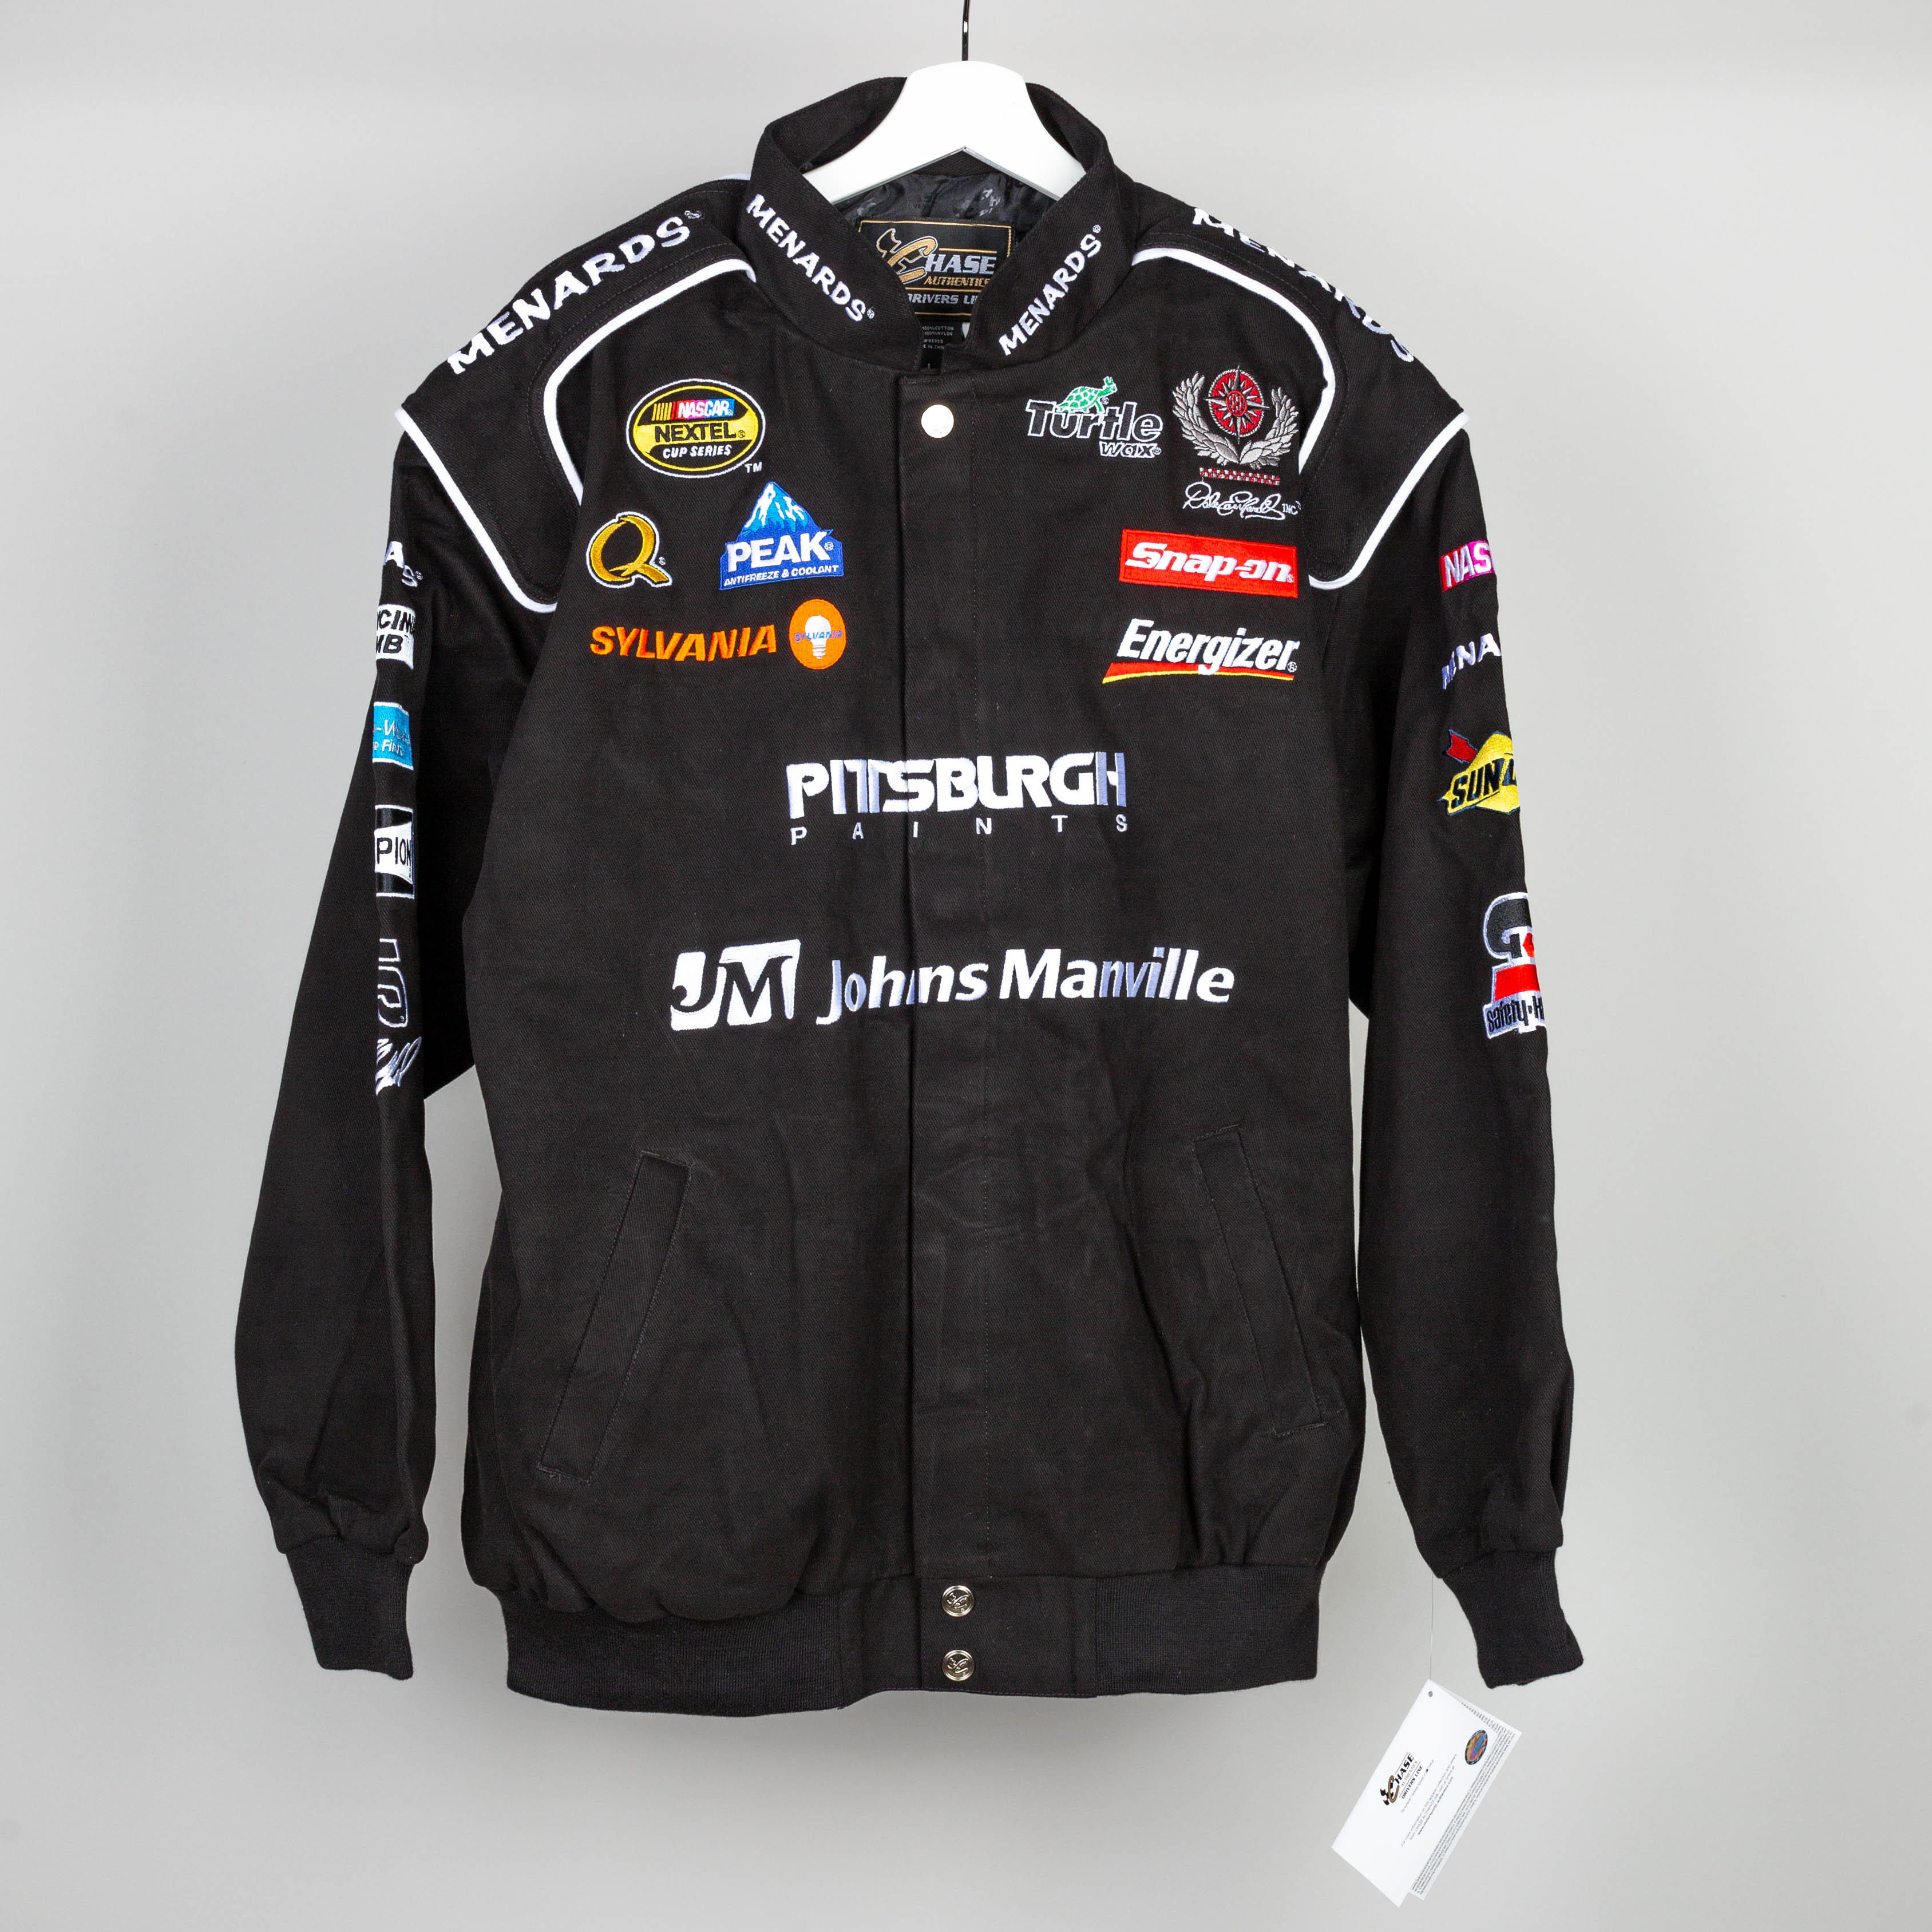 Dale Earnhardt Nascar Racing Jacket